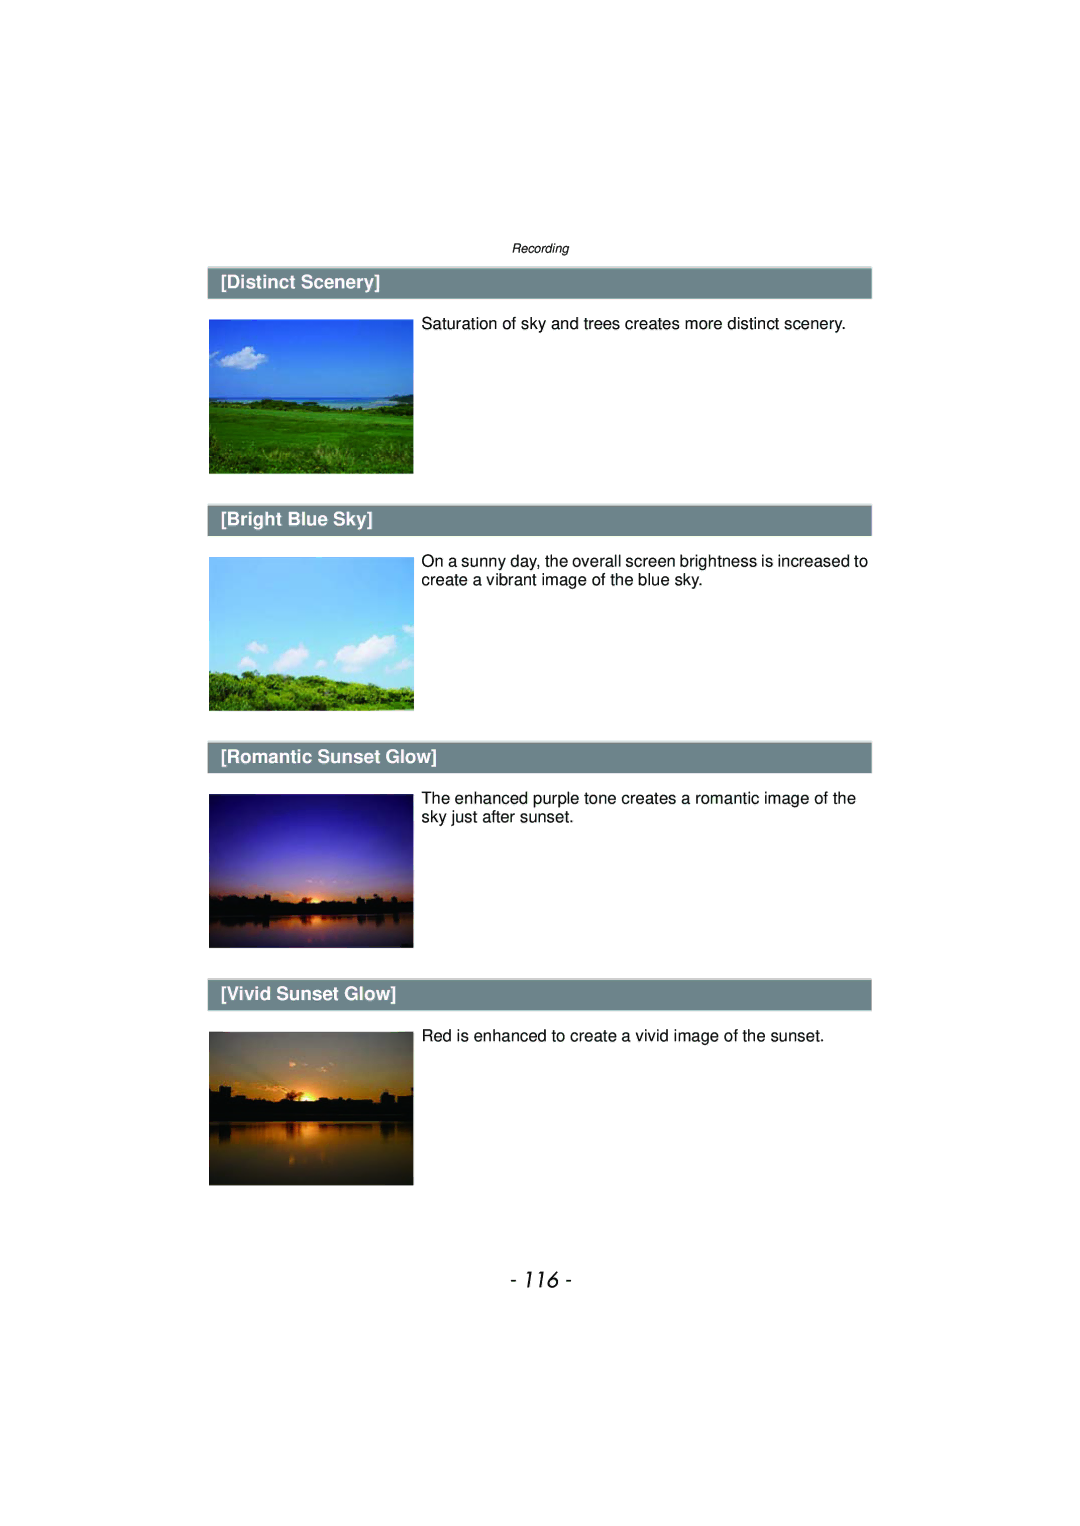 Panasonic DMC-GF5 owner manual 116, Distinct Scenery, Bright Blue Sky, Romantic Sunset Glow, Vivid Sunset Glow 